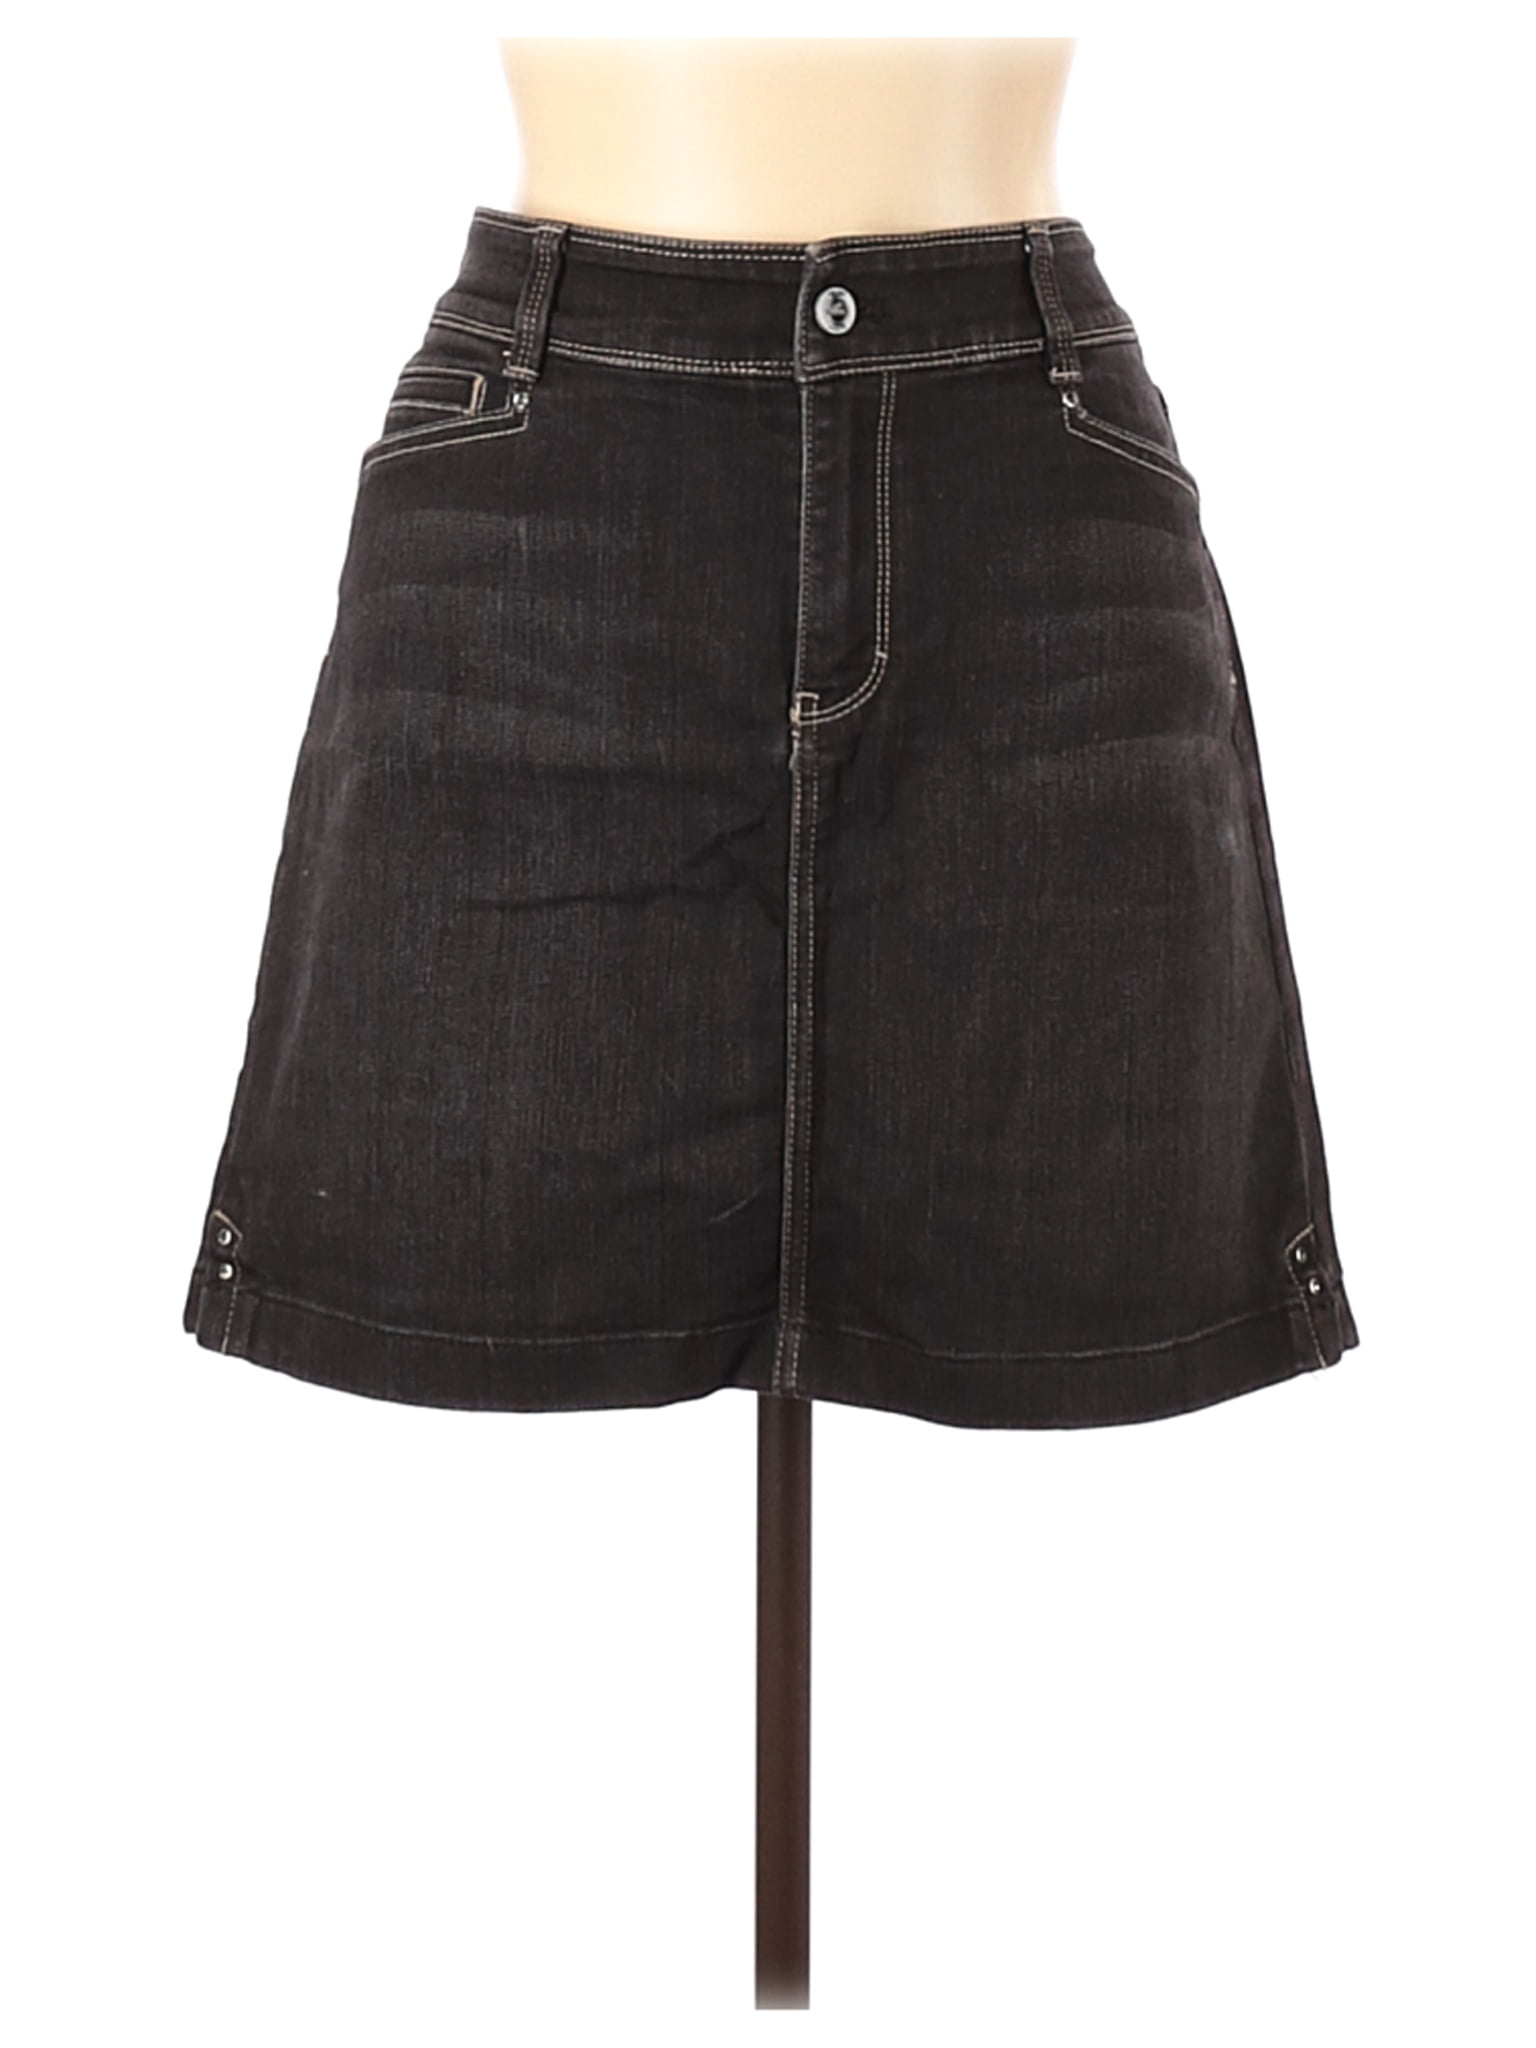 black jean skirt walmart